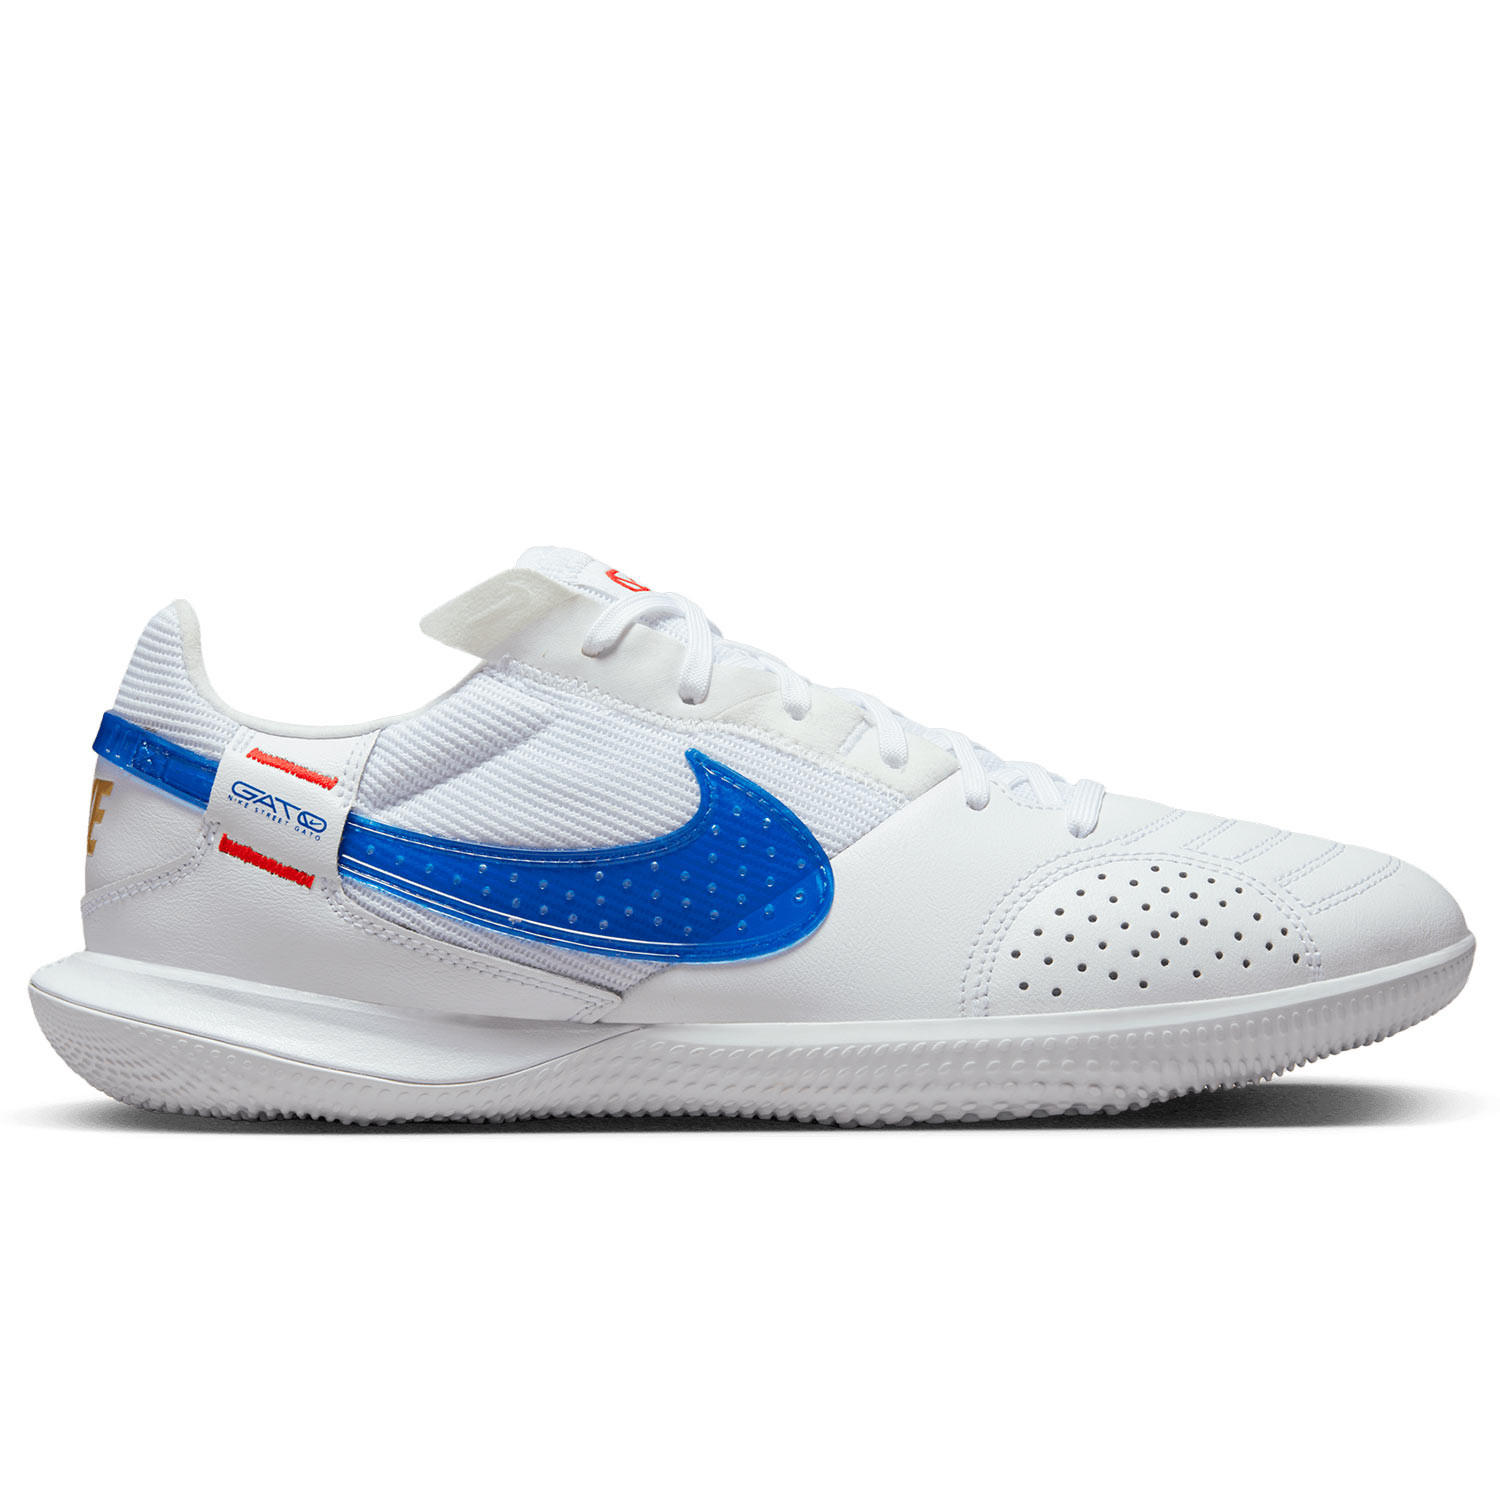 Oxido pedal cera Zapatillas futsal Nike Street Gato blancas y azules | futbolmania